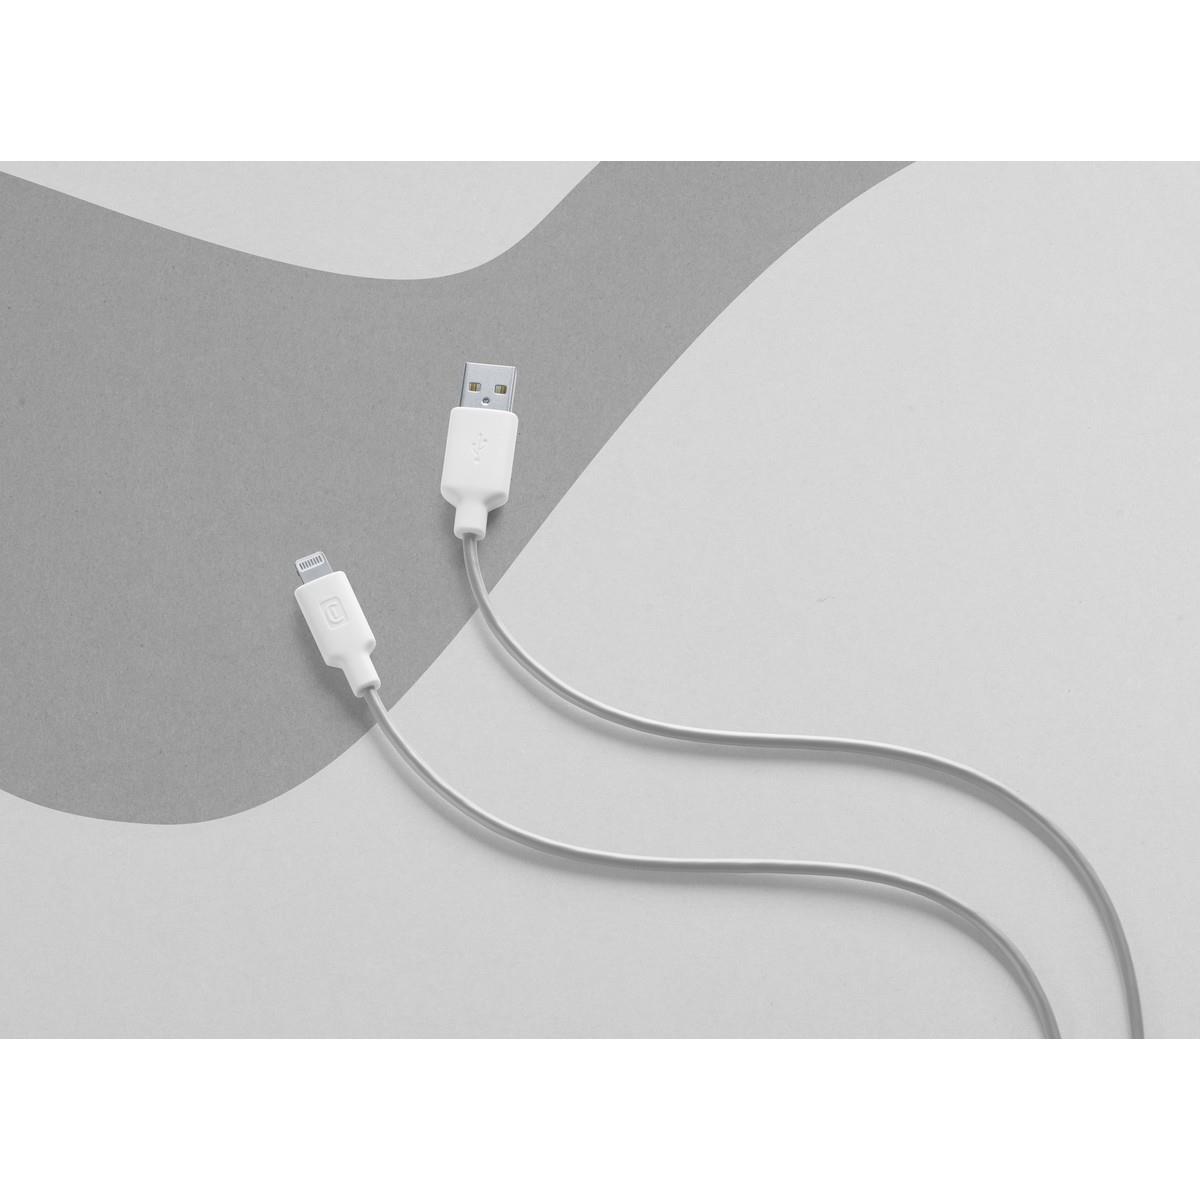 Lade- und Datenkabel STYLE COLOR 100cm USB Type-A auf Apple Lightning